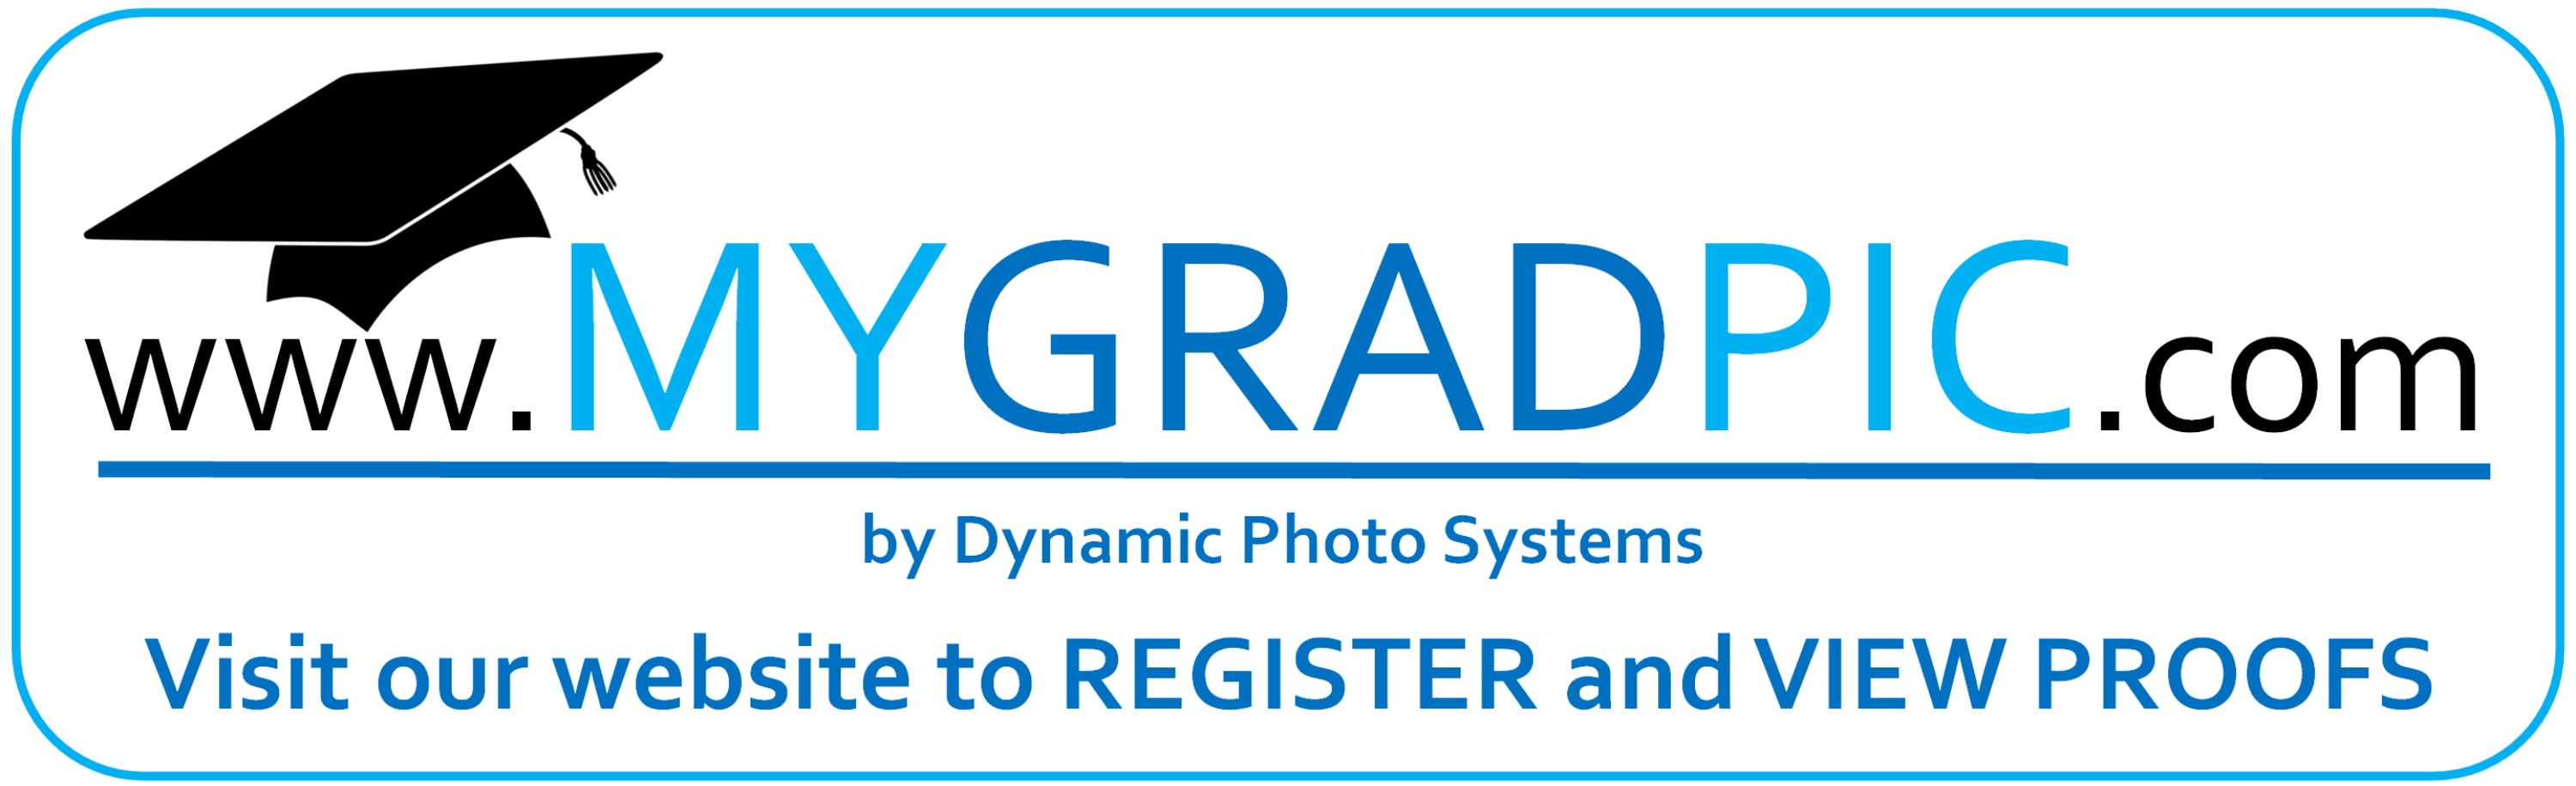 dps-logo---mygradpic---website-registration-button.png